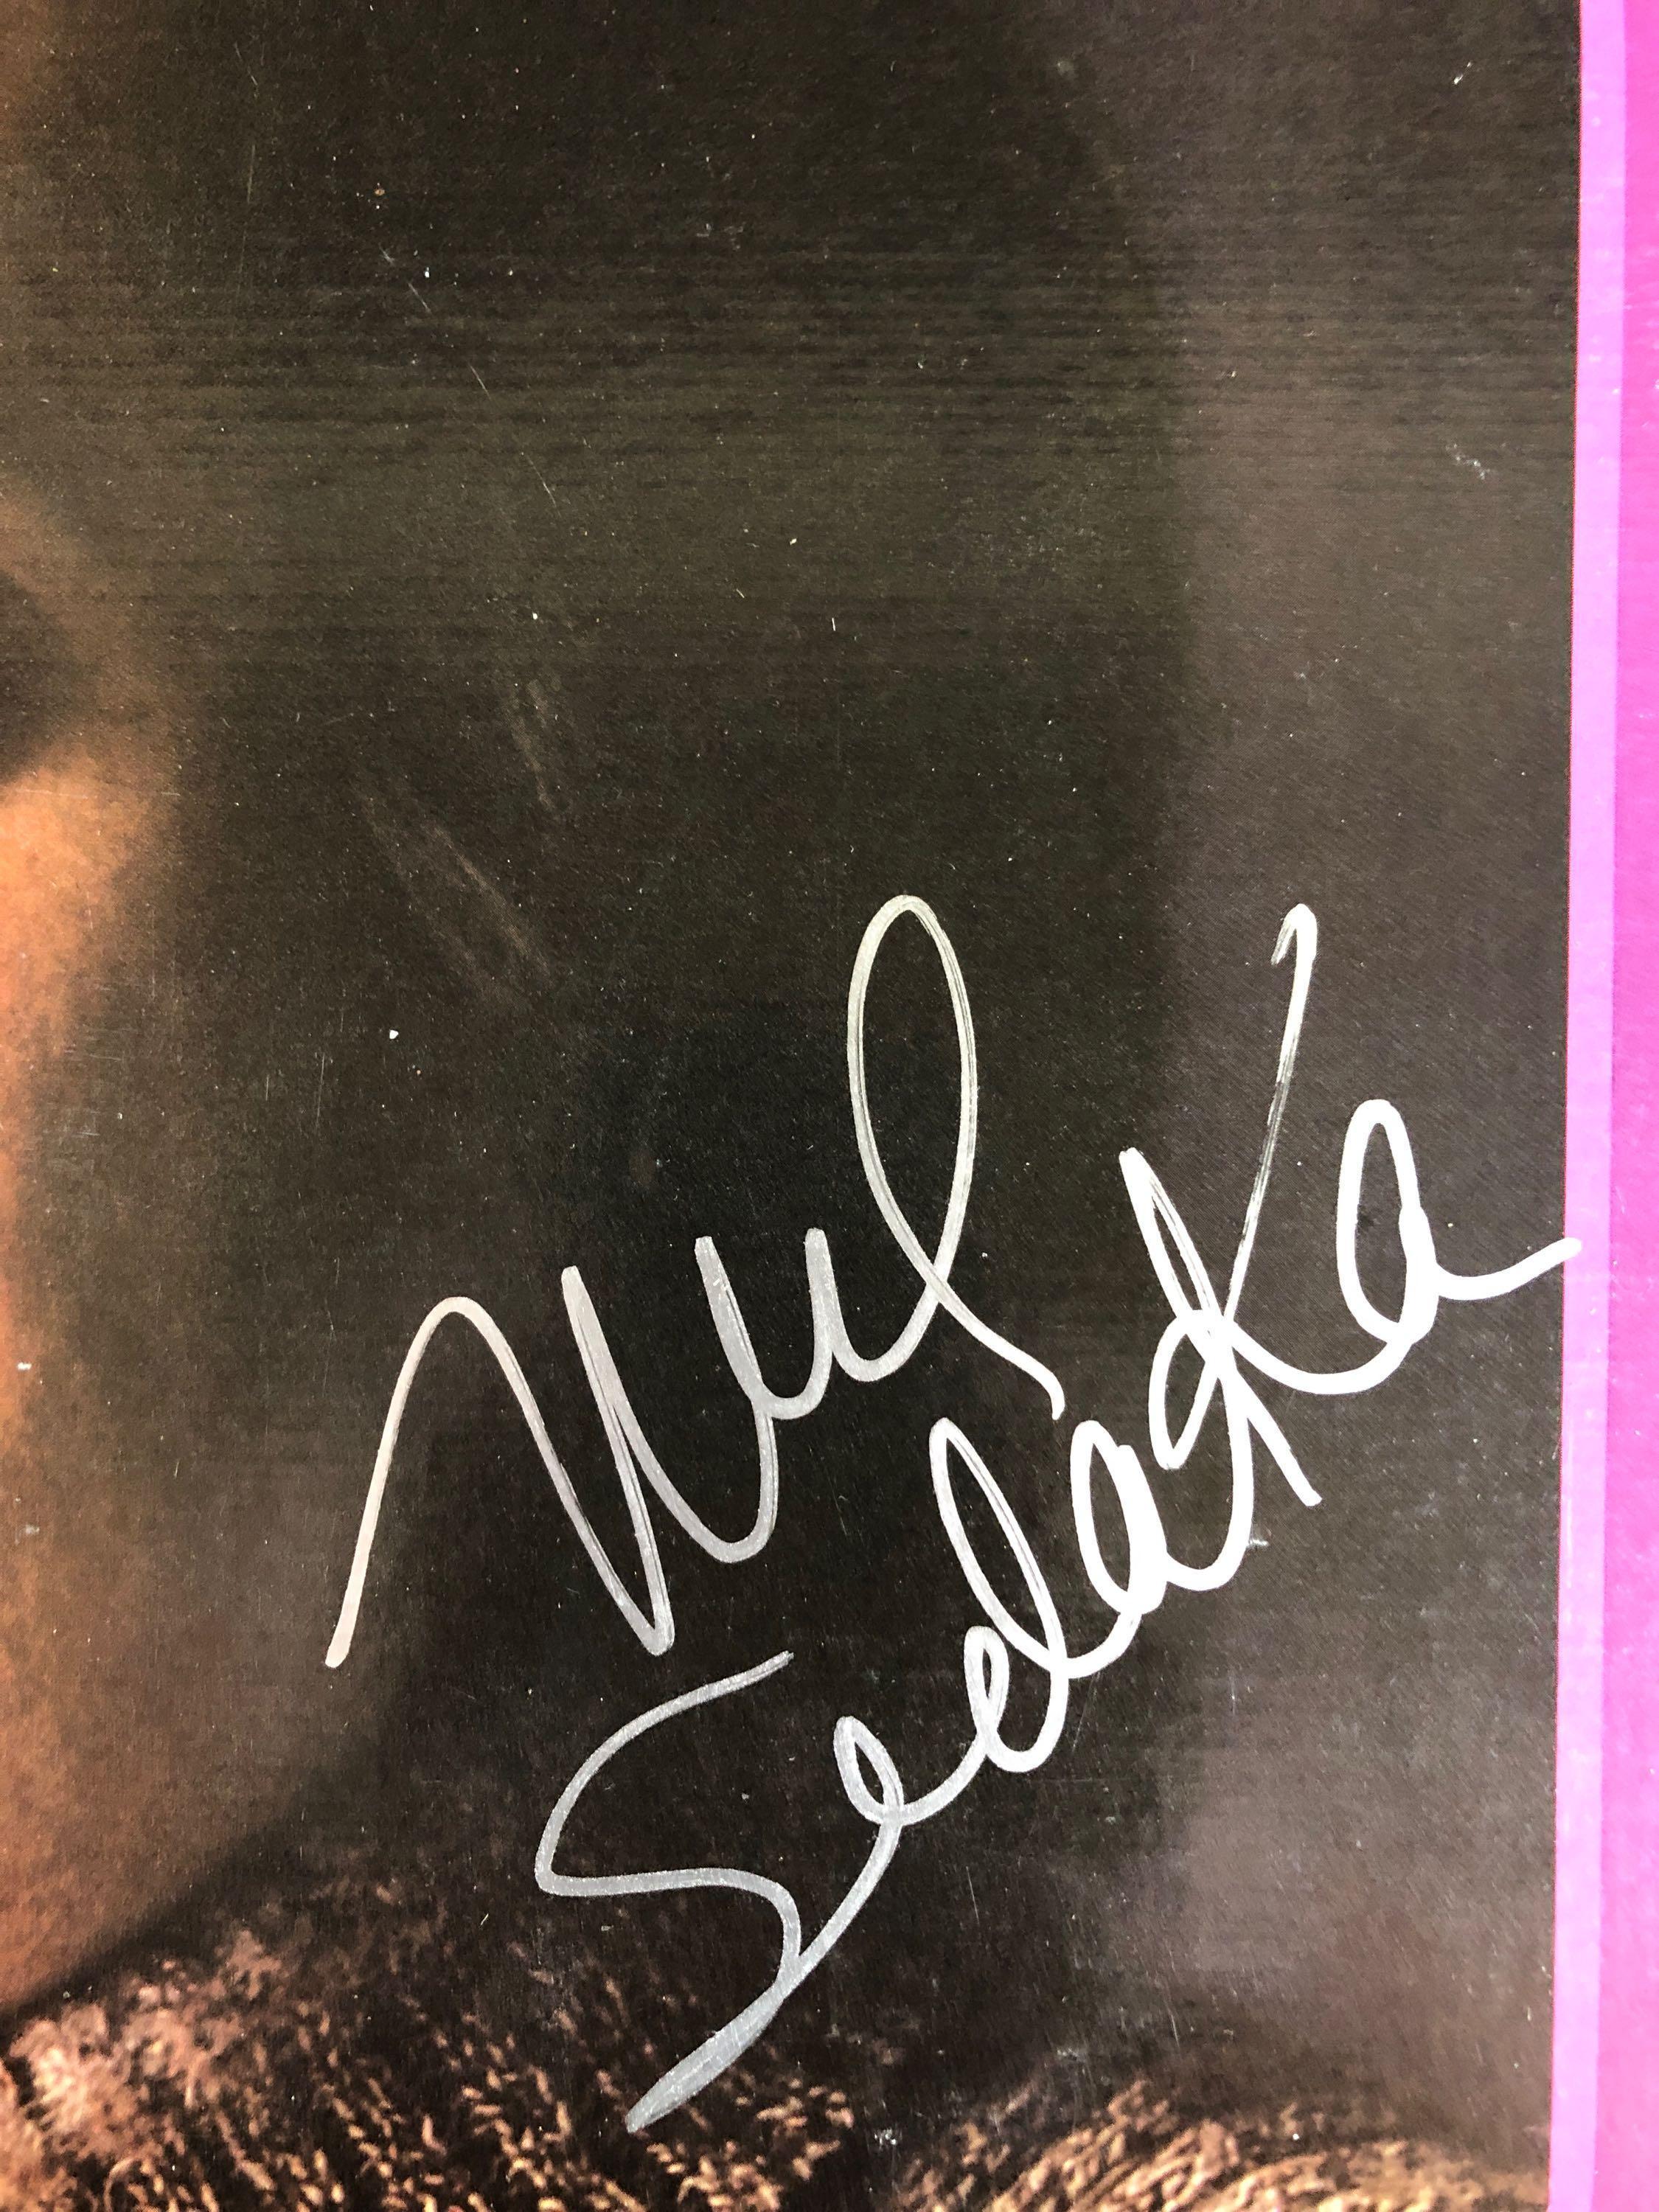 Neil Sedaka "Solitaire" Autographed Album